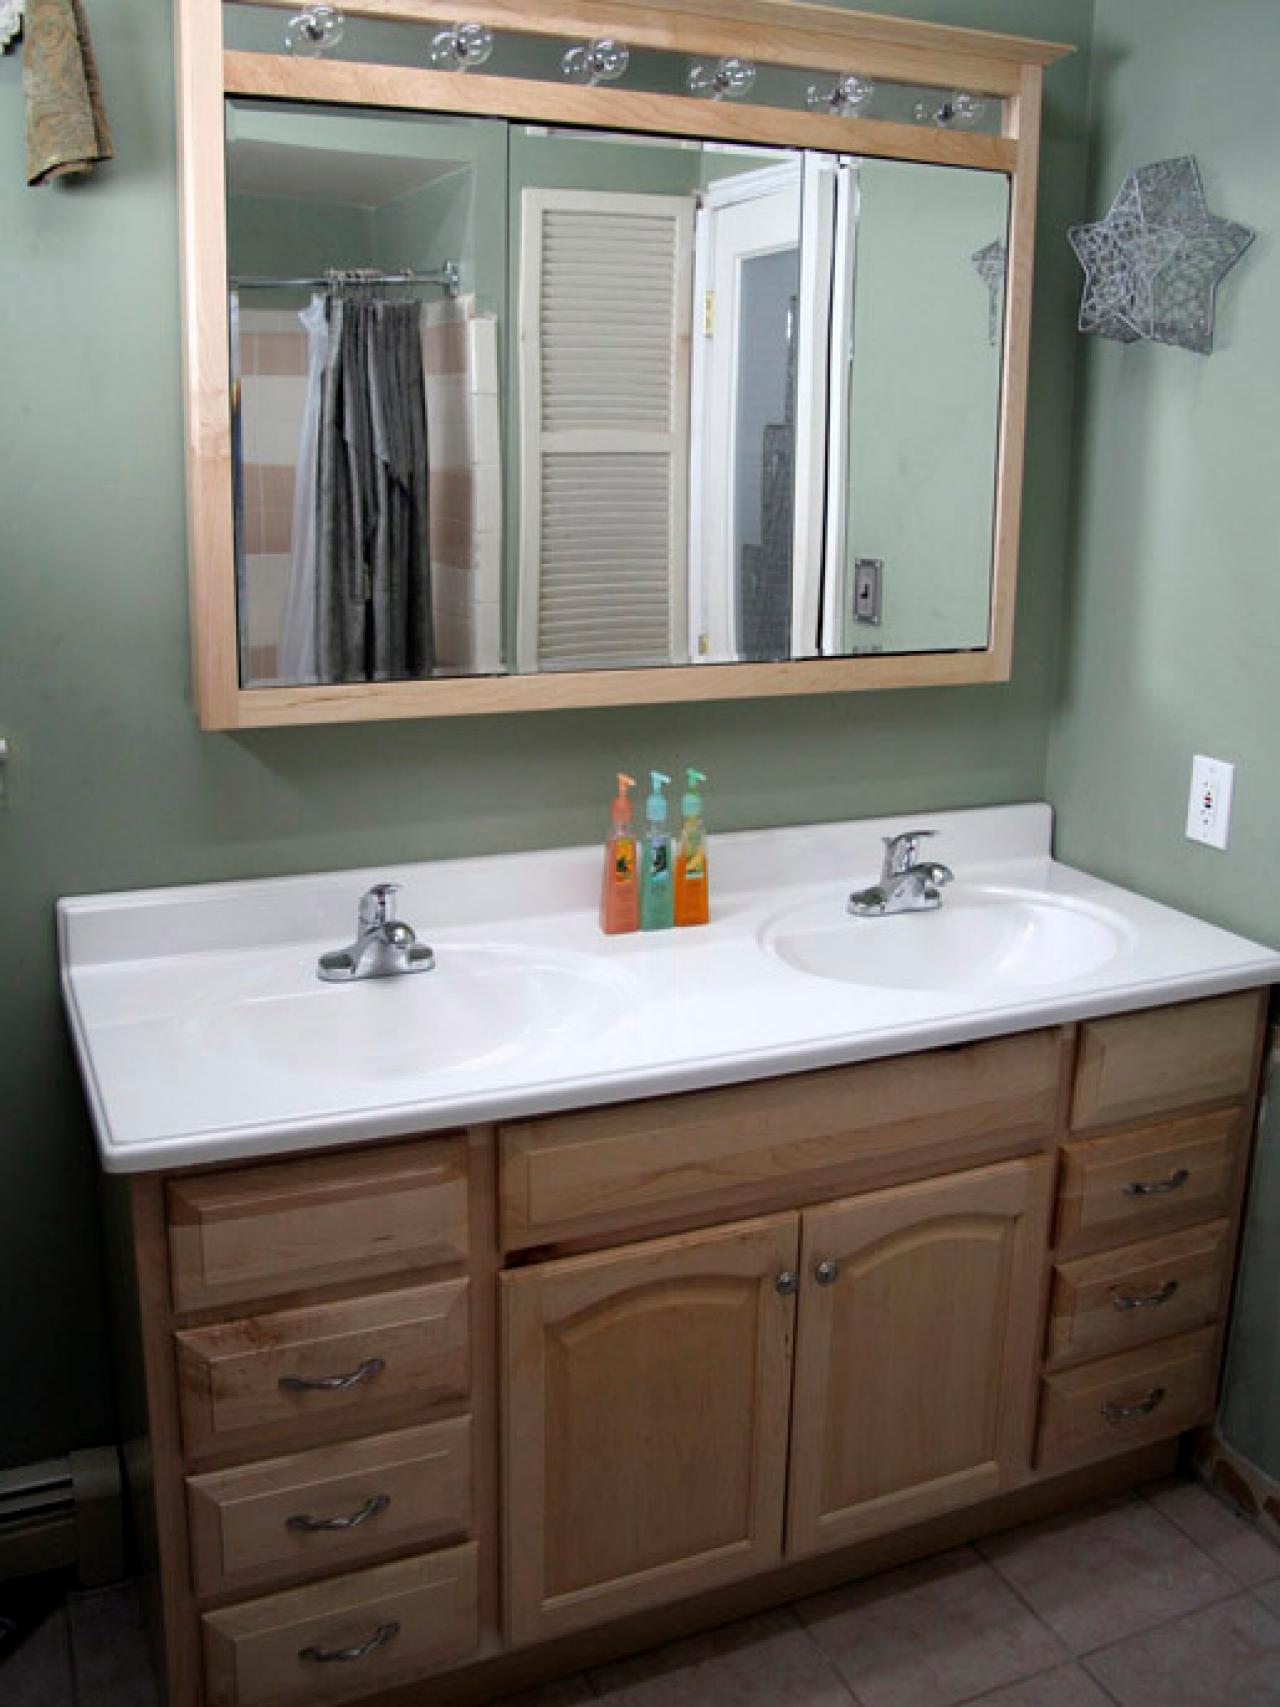 Installing A Bathroom Vanity - How To Install Bathroom Vanity